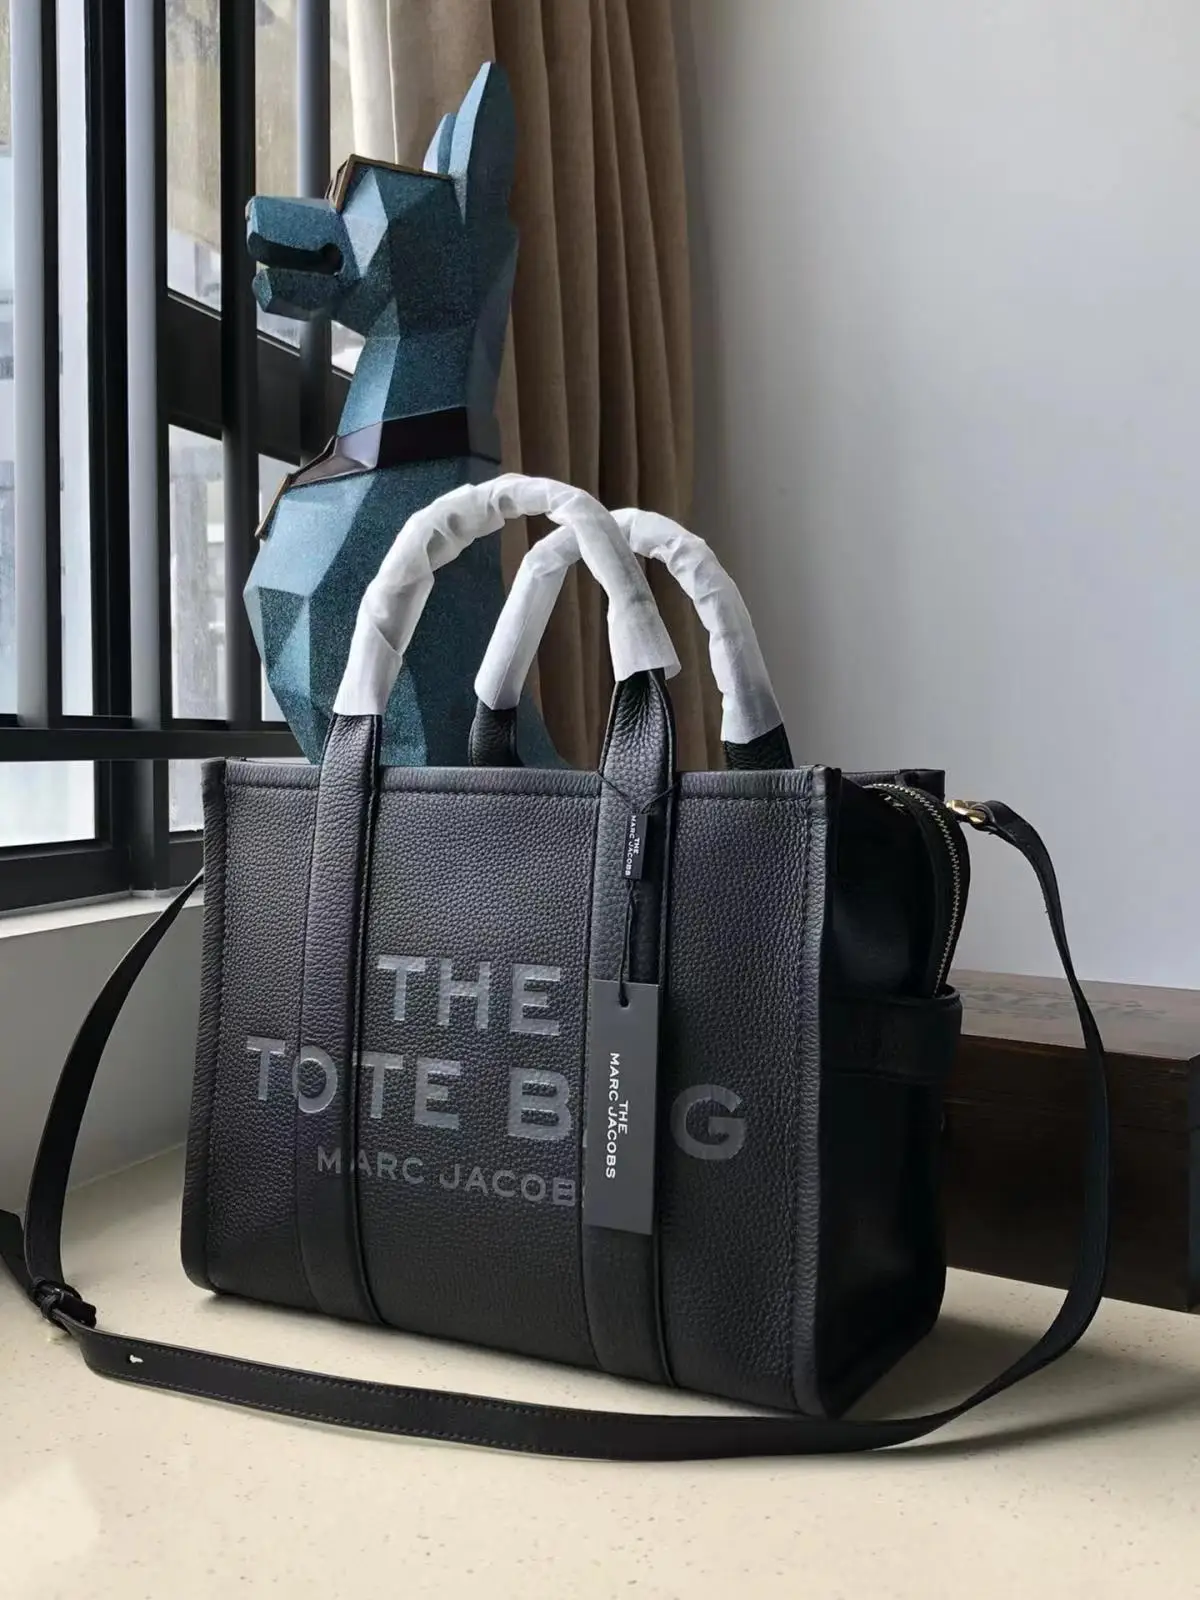 

Marc Jacobs Designer Brand Tote Bags for Women Handbags Luxury Bag Matte Leather Shoulder Crossbody Small Shopper Handbag